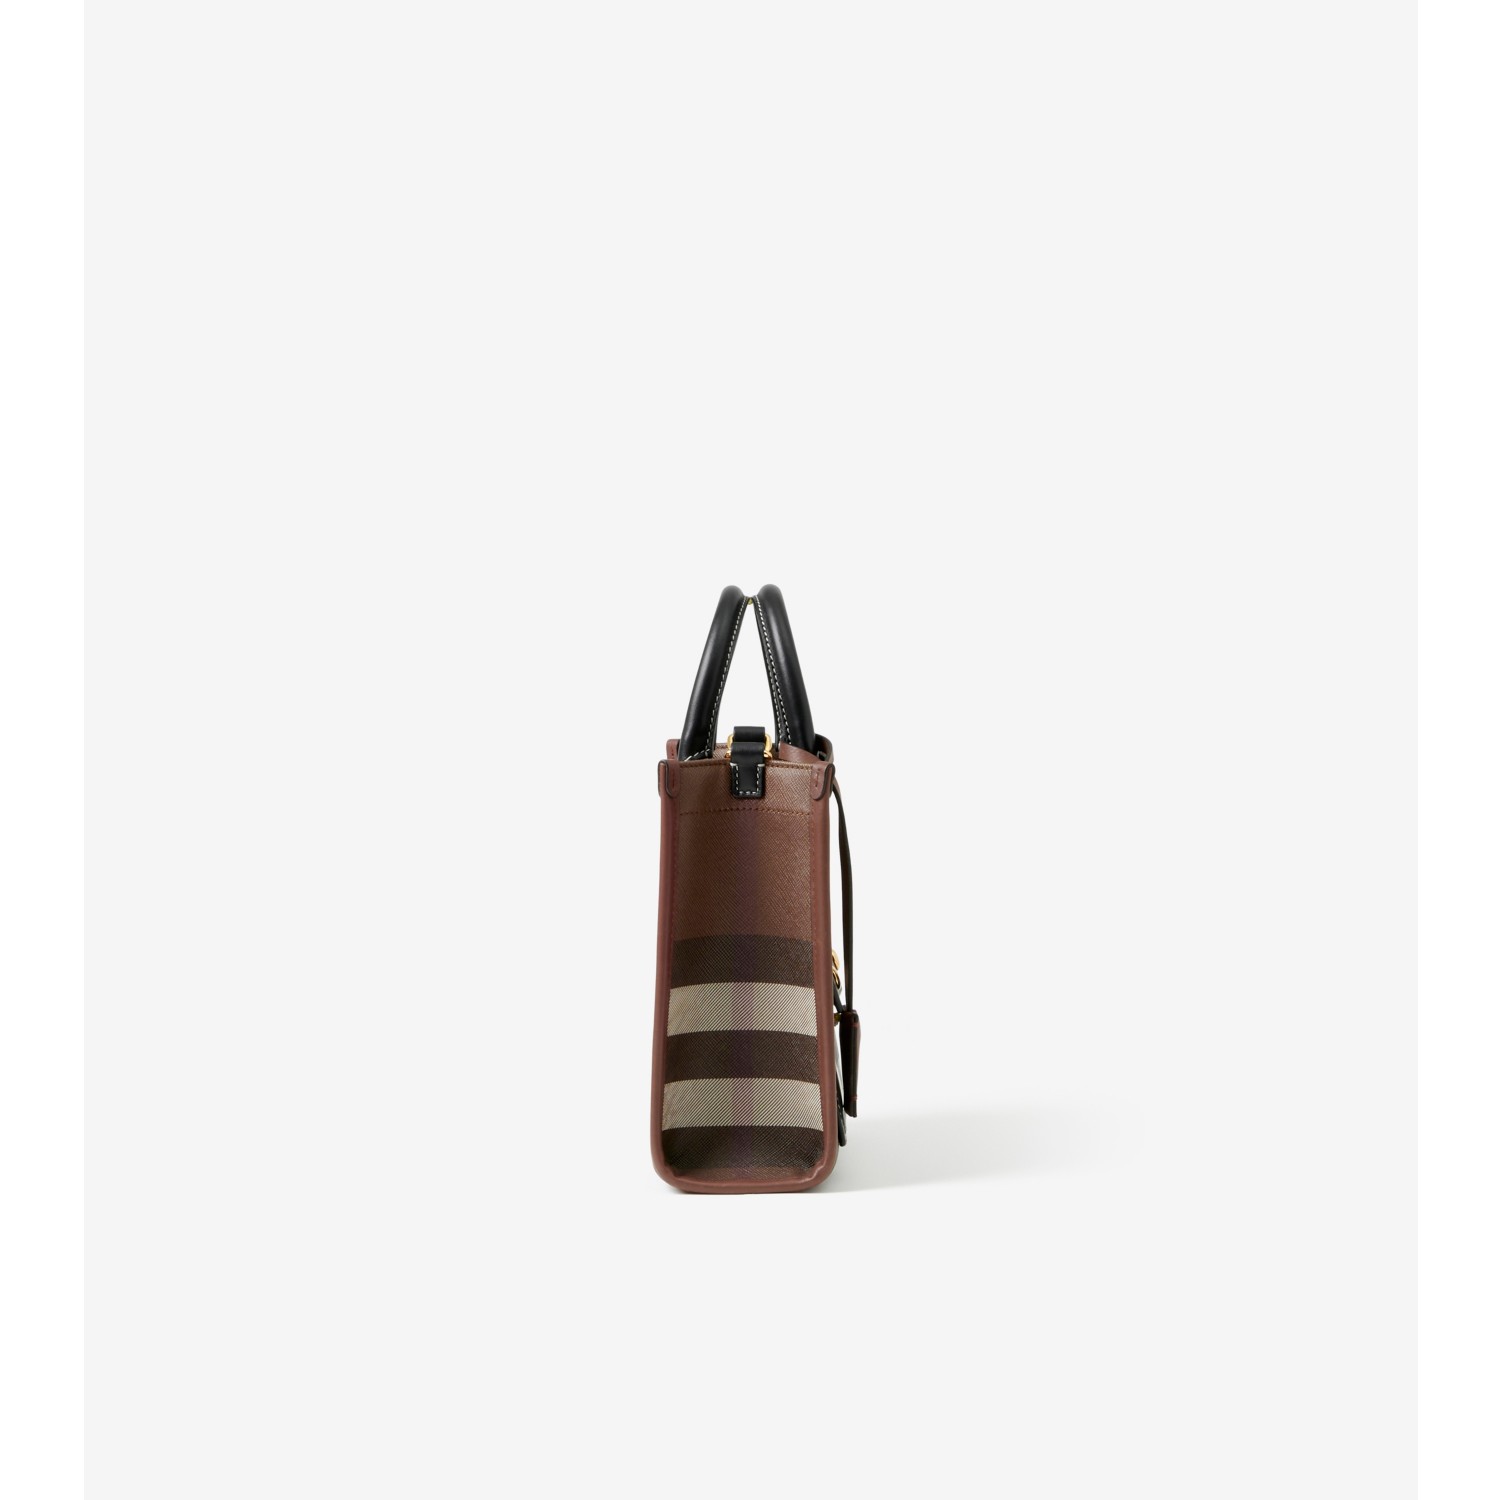 Burberry Mini Freya Tote Bag – Acroera